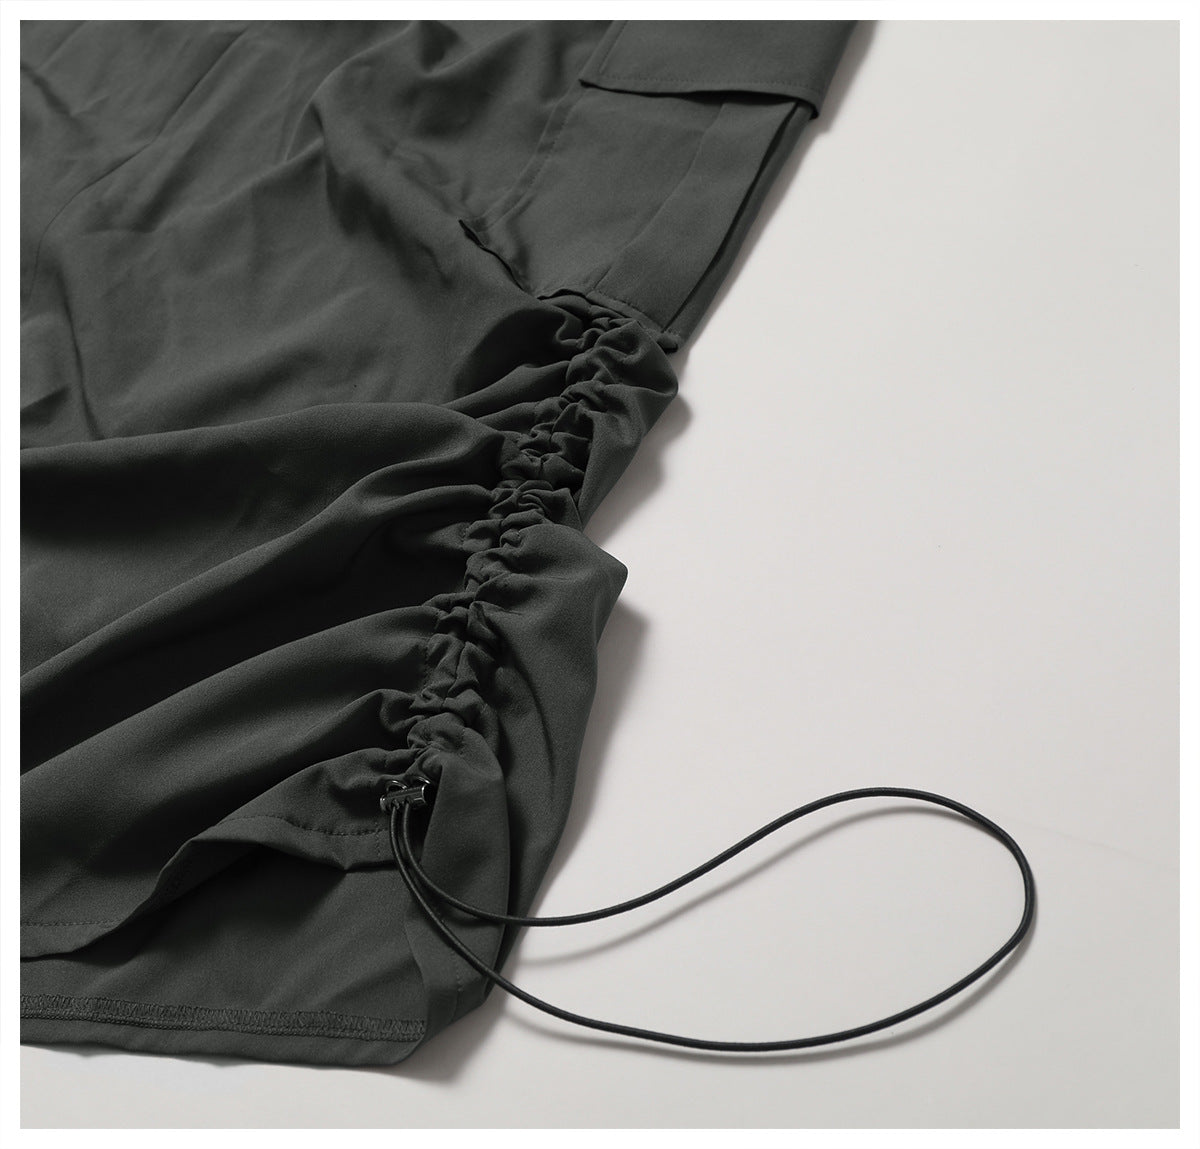 23.07 retro tooling skirt waist sports casual skirt mid-length all-match tooling pocket skirt 8336